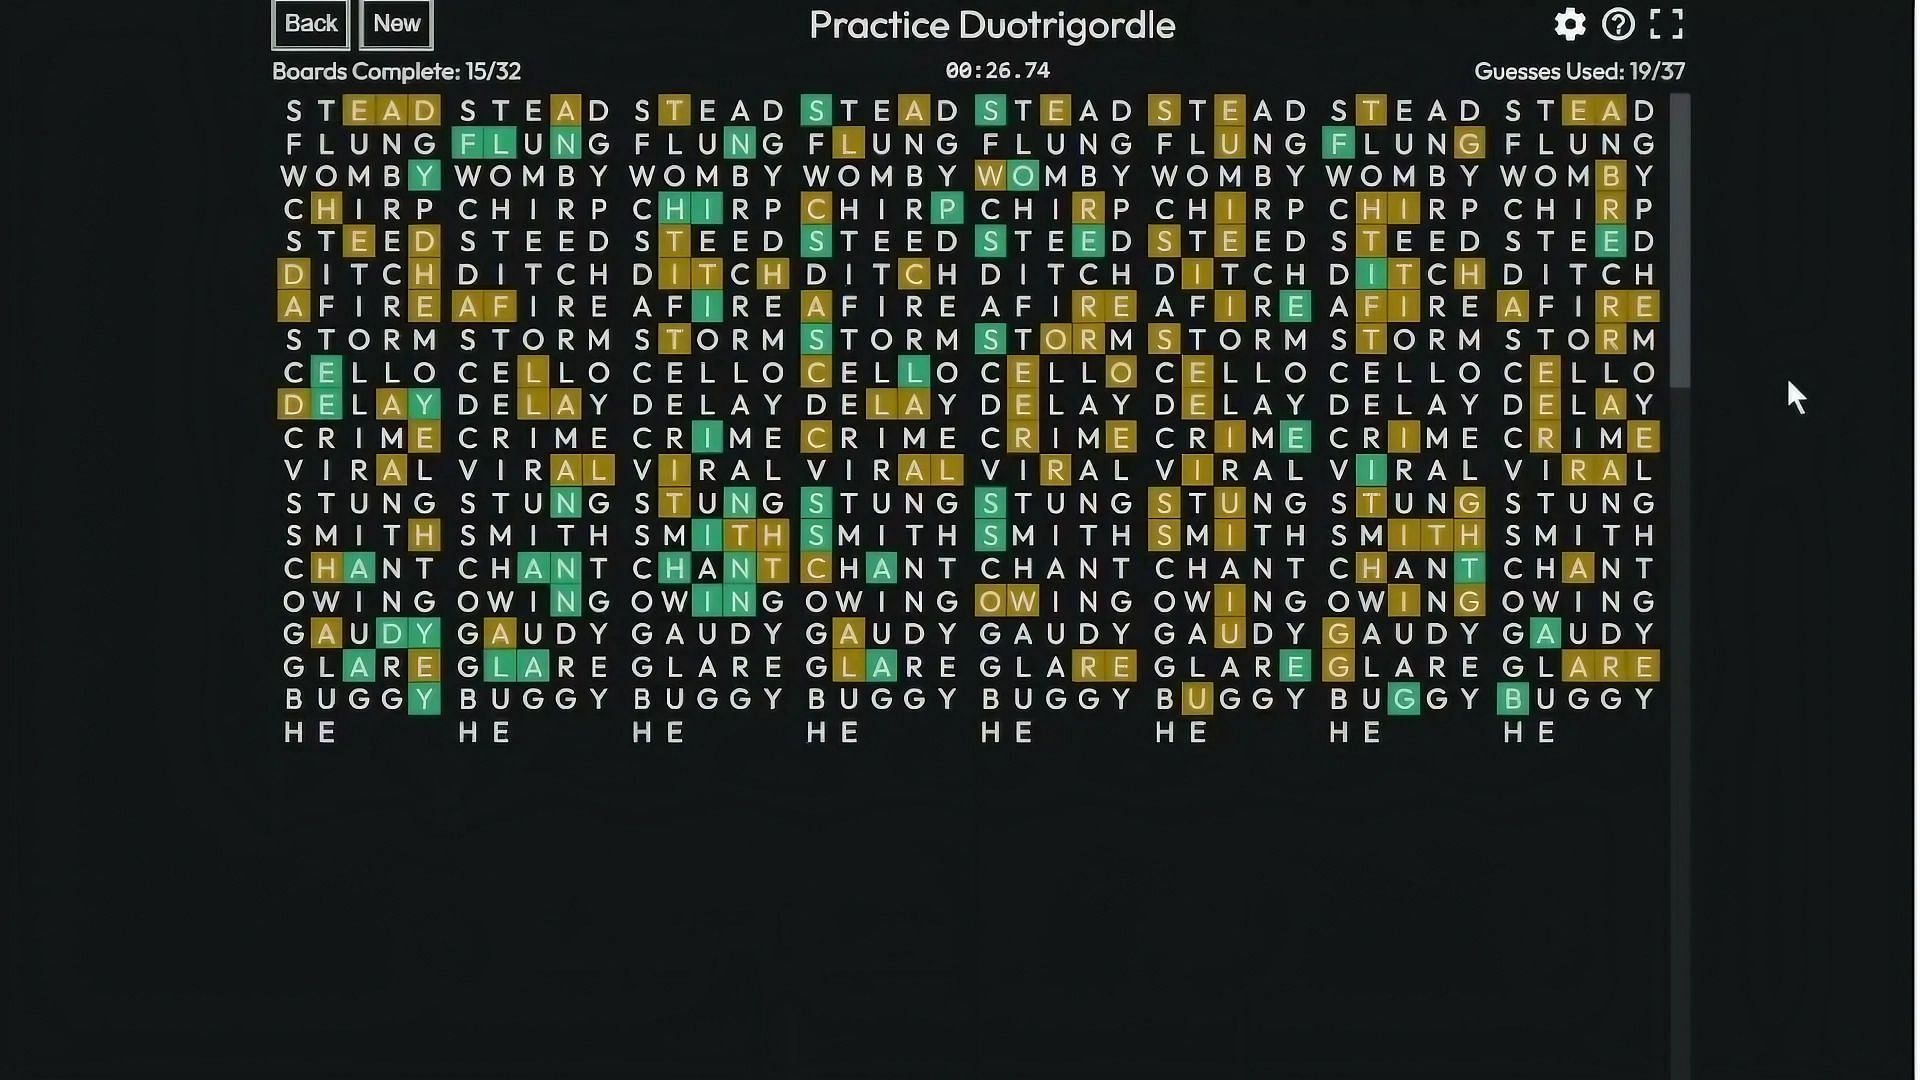 Duotrigordle provides a stiff challenge to players (Image via Duotrigordle)